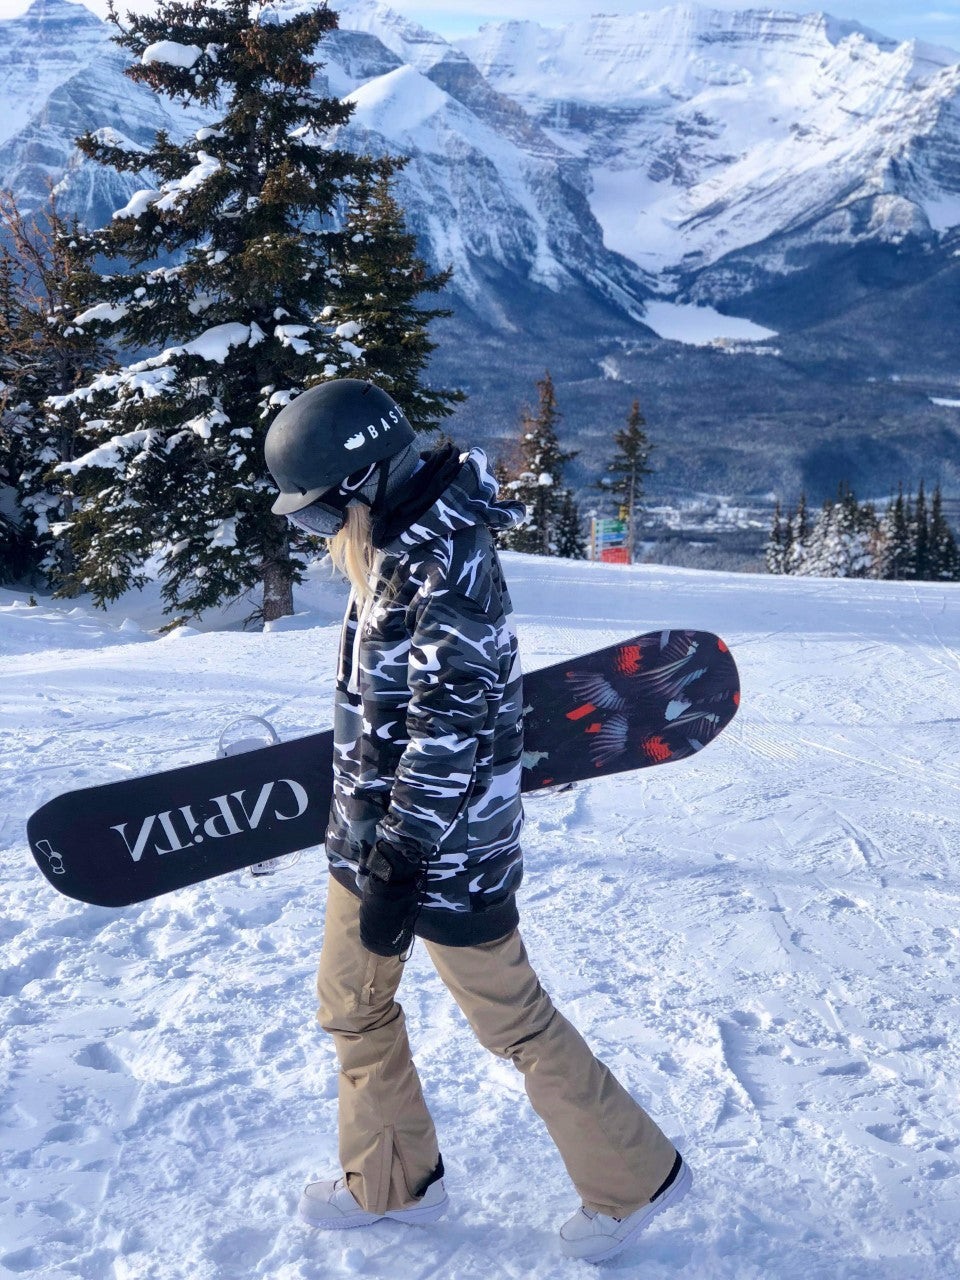 Snow Camo Tall Ski/Snowboard Hoodie - Unisex